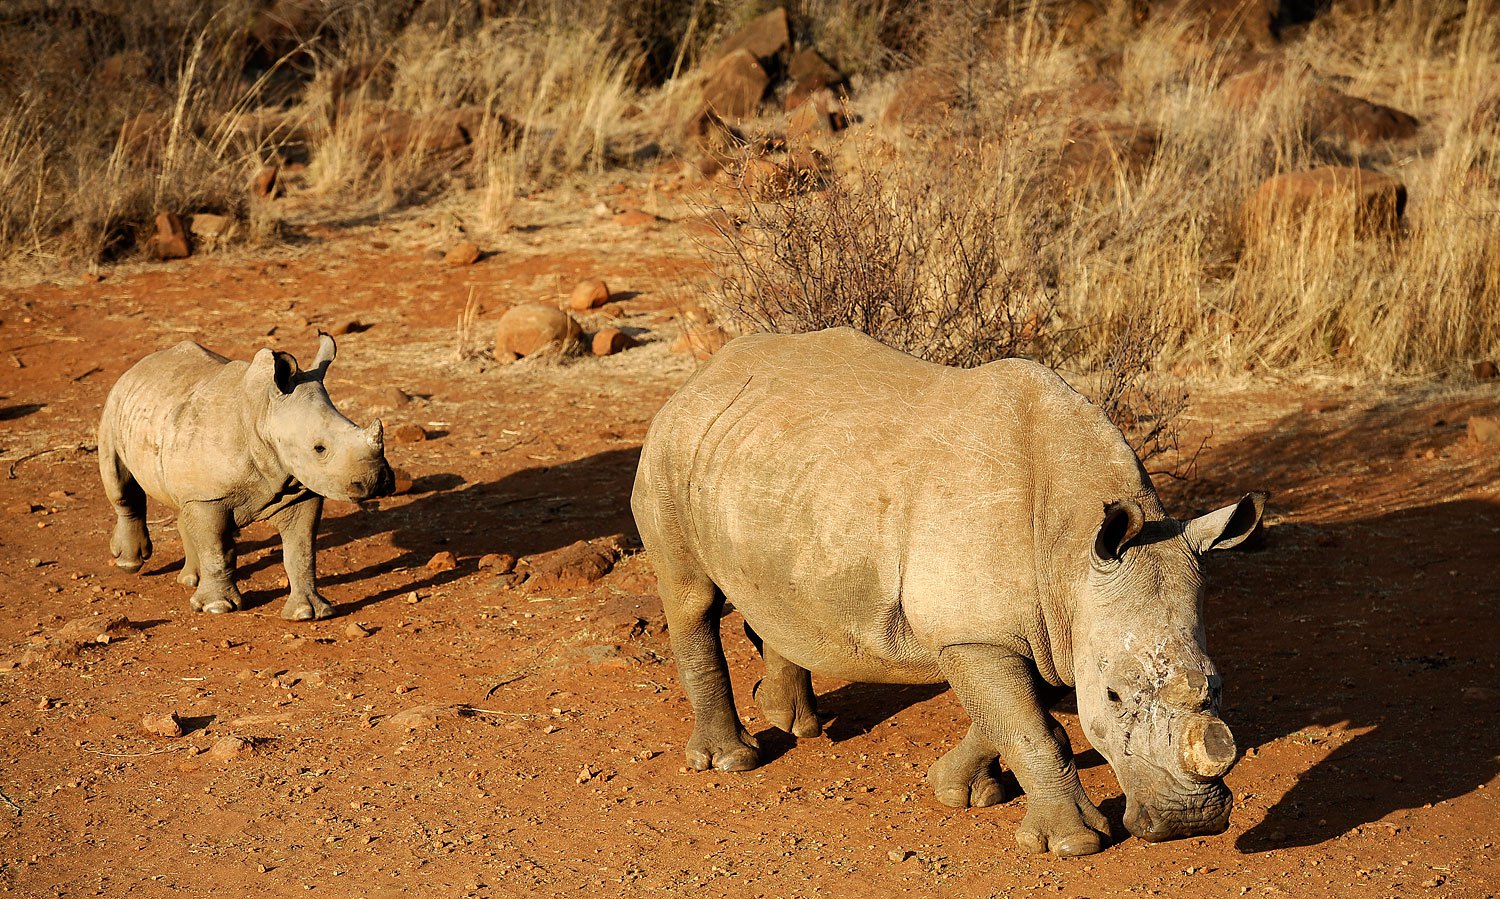 A black dehorned rhinoceros is followed